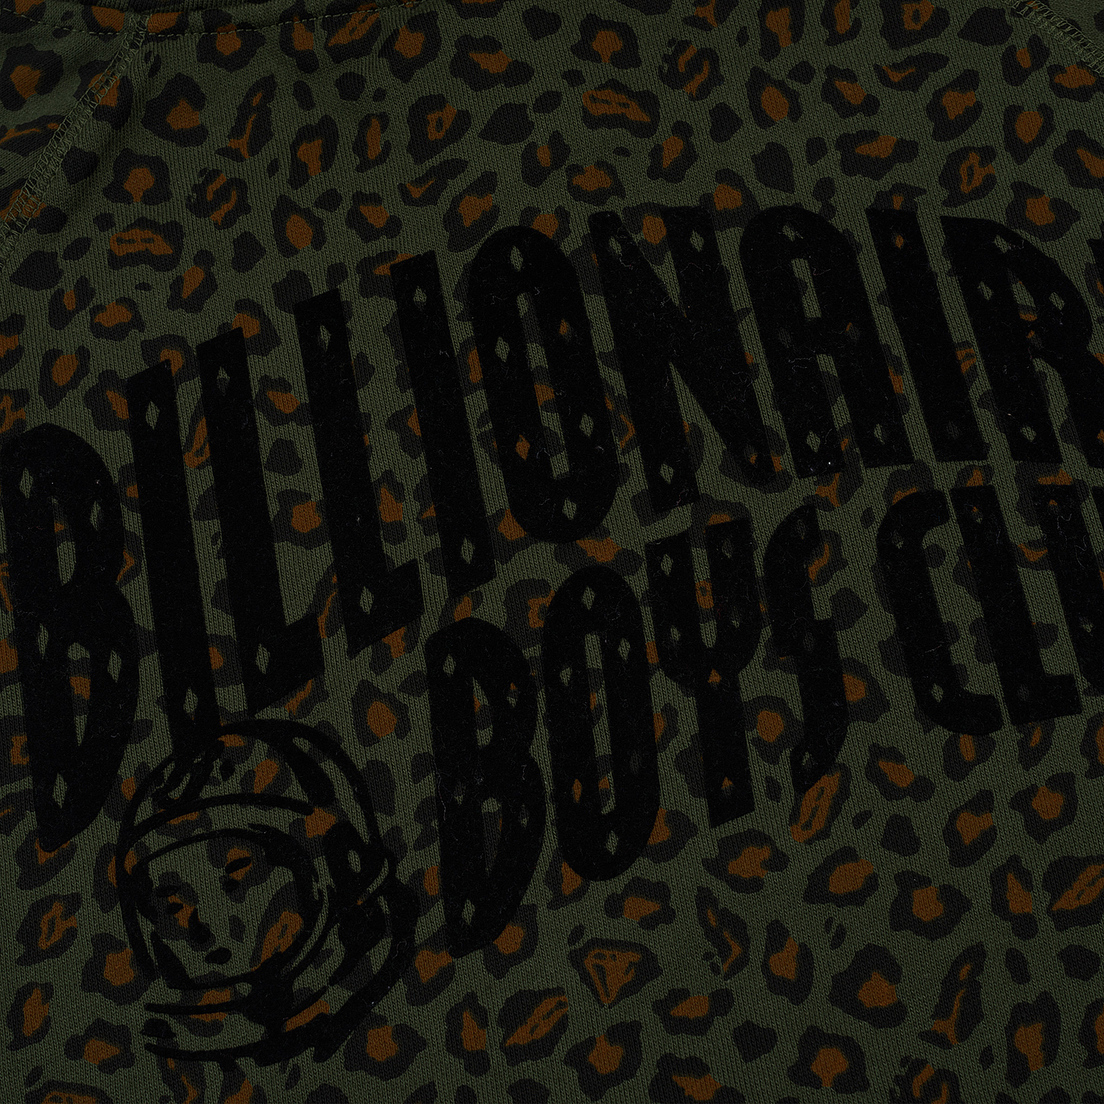 Billionaire Boys Club Мужская толстовка Leopard Print Full Zip Hoodie